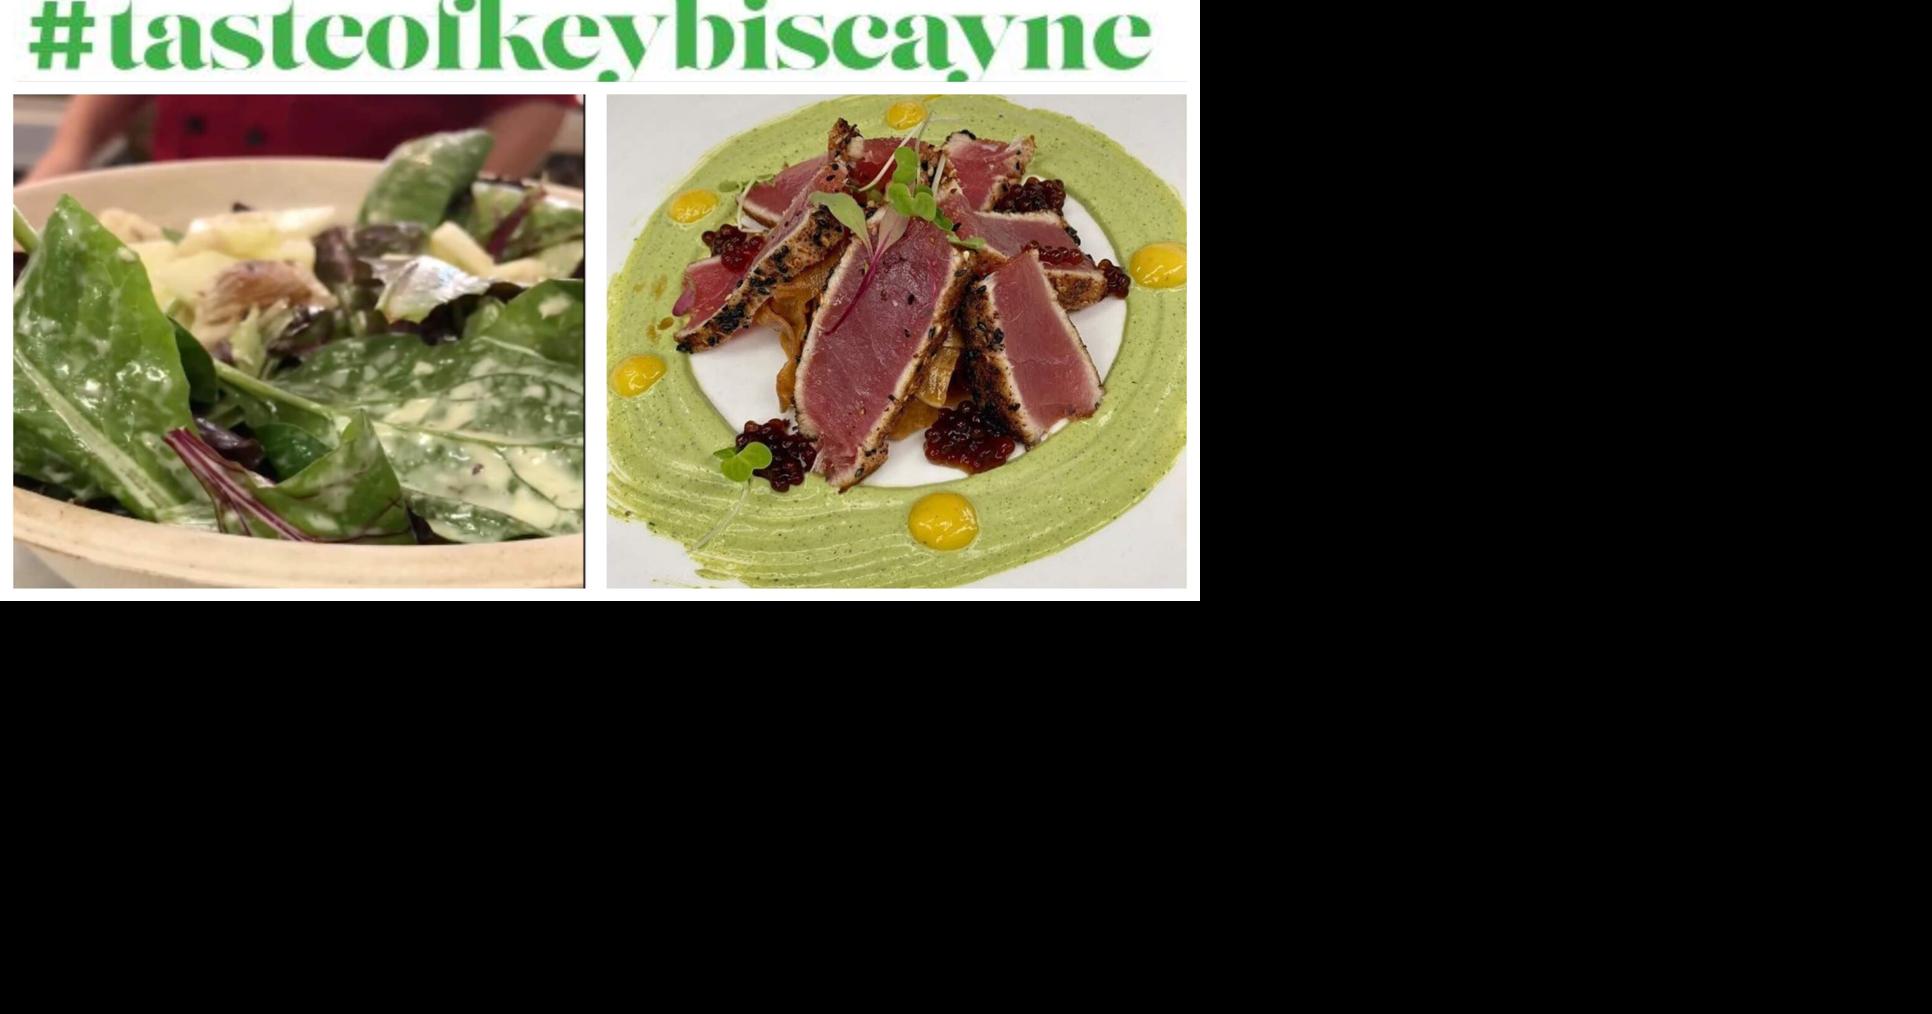 Monday health dining on Key Biscayne | Local | islandernews.com